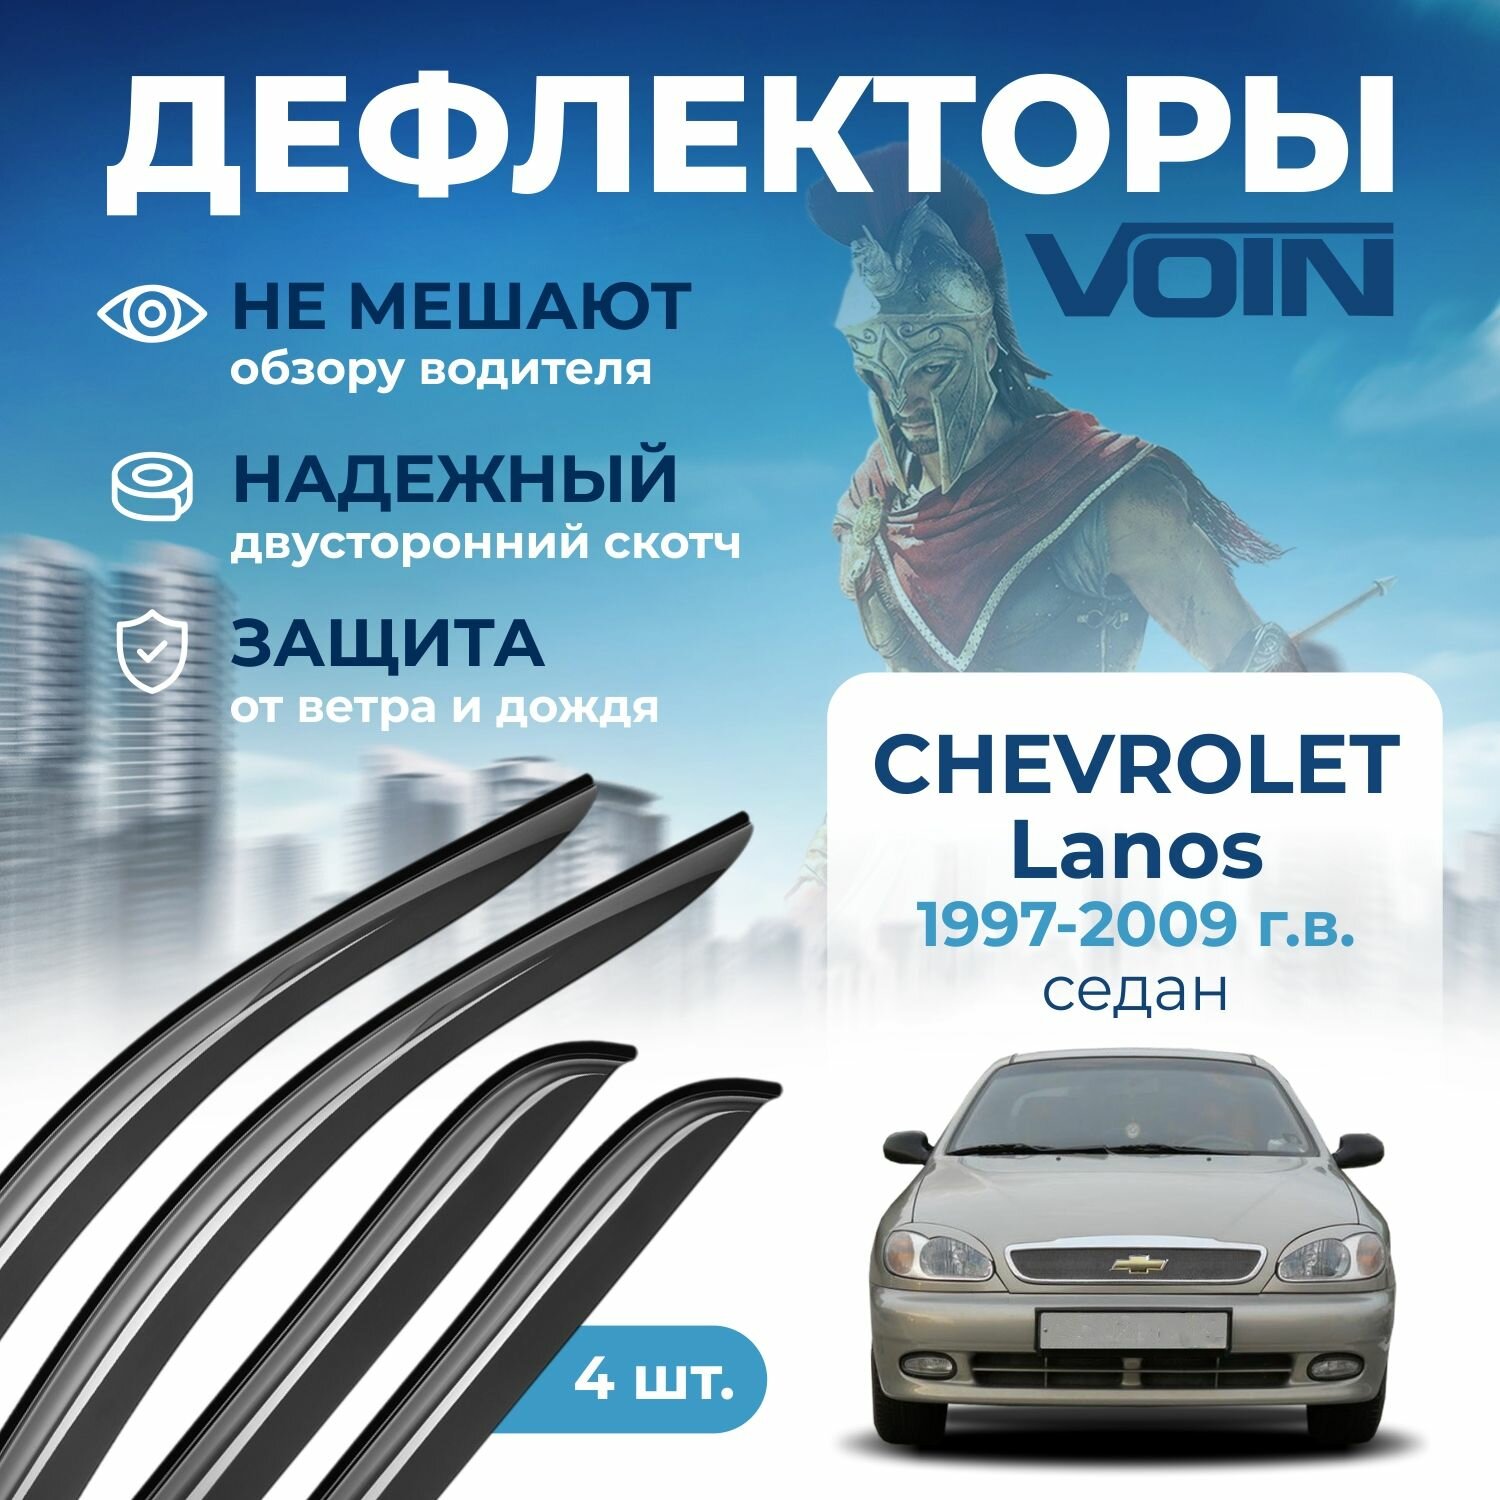 Дефлекторы окон Voin на автомобиль Chevrolet Lanos 1997-2009 /ЗАЗ Chance /седан/накладные 4 шт